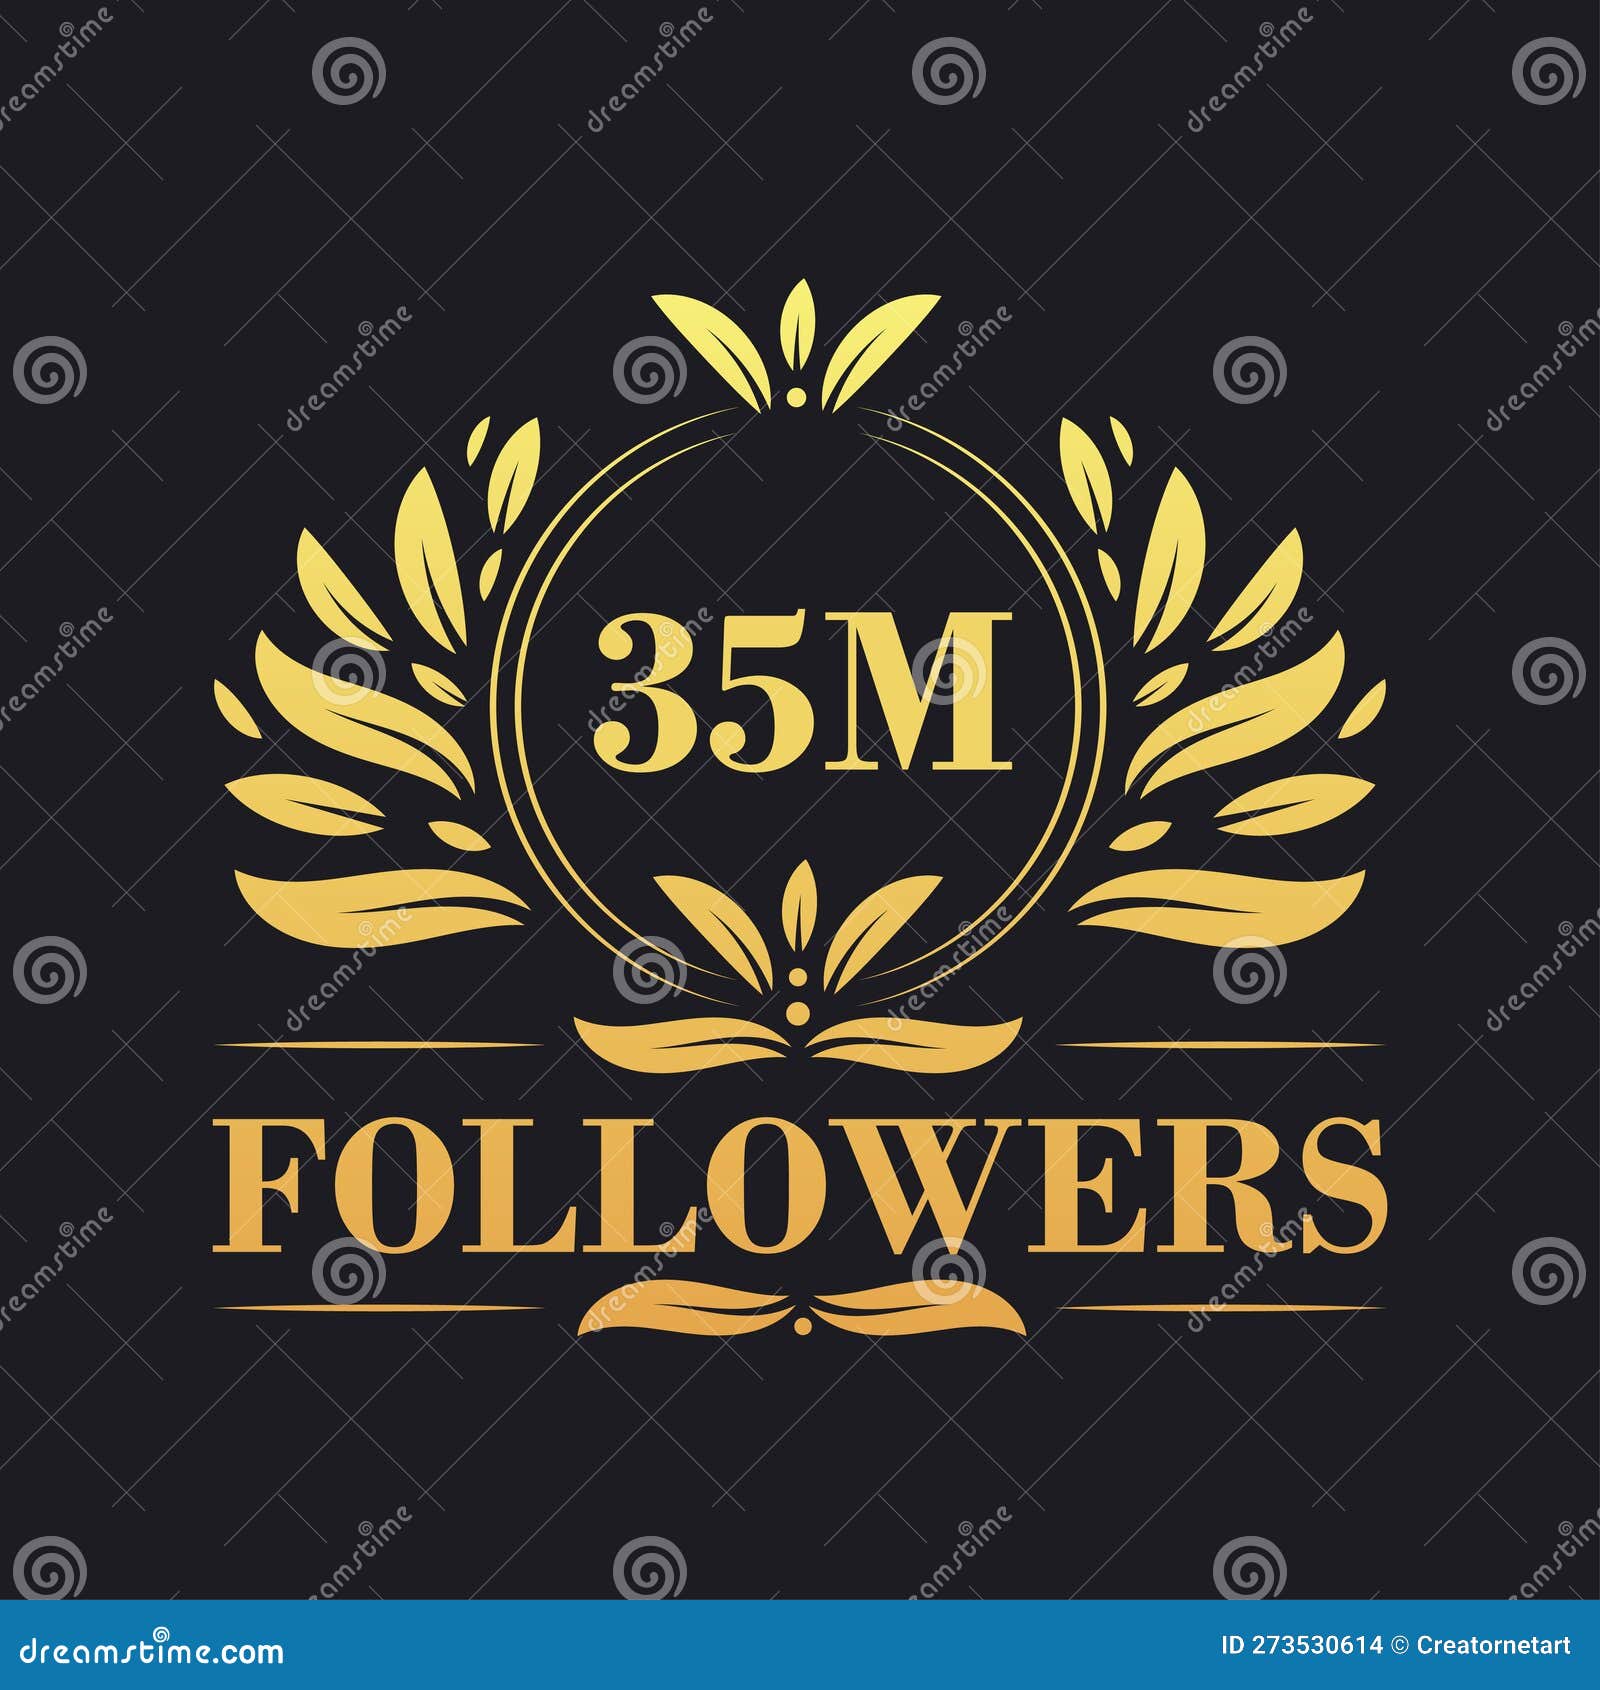 35m followers celebration . luxurious 35m followers logo for social media followers